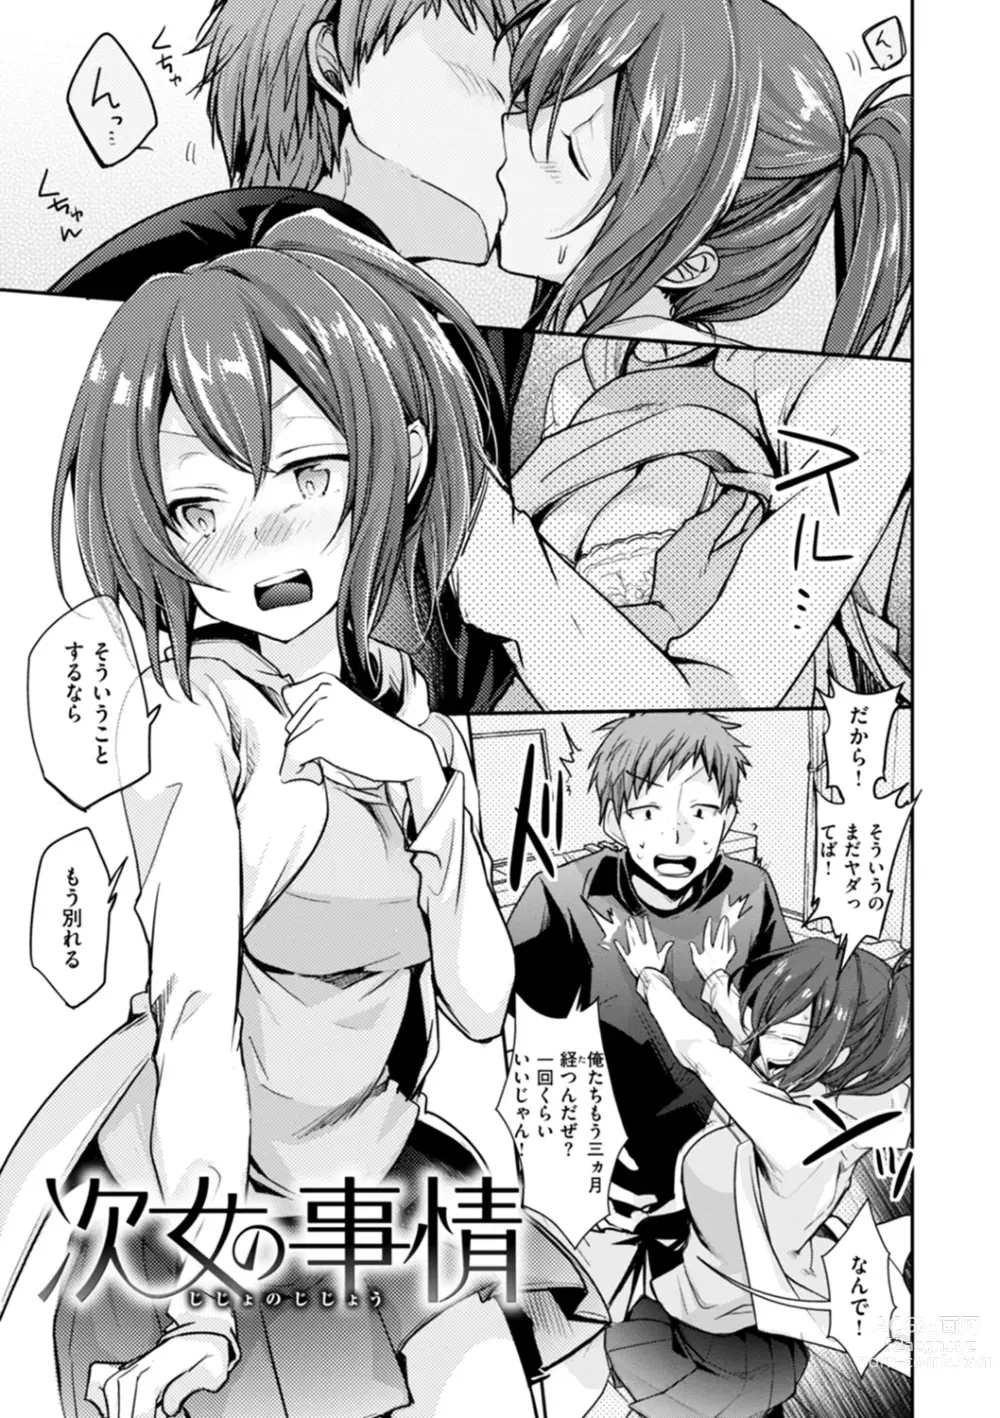 Page 3 of manga Kanojo no Jijou - Her Circumstances